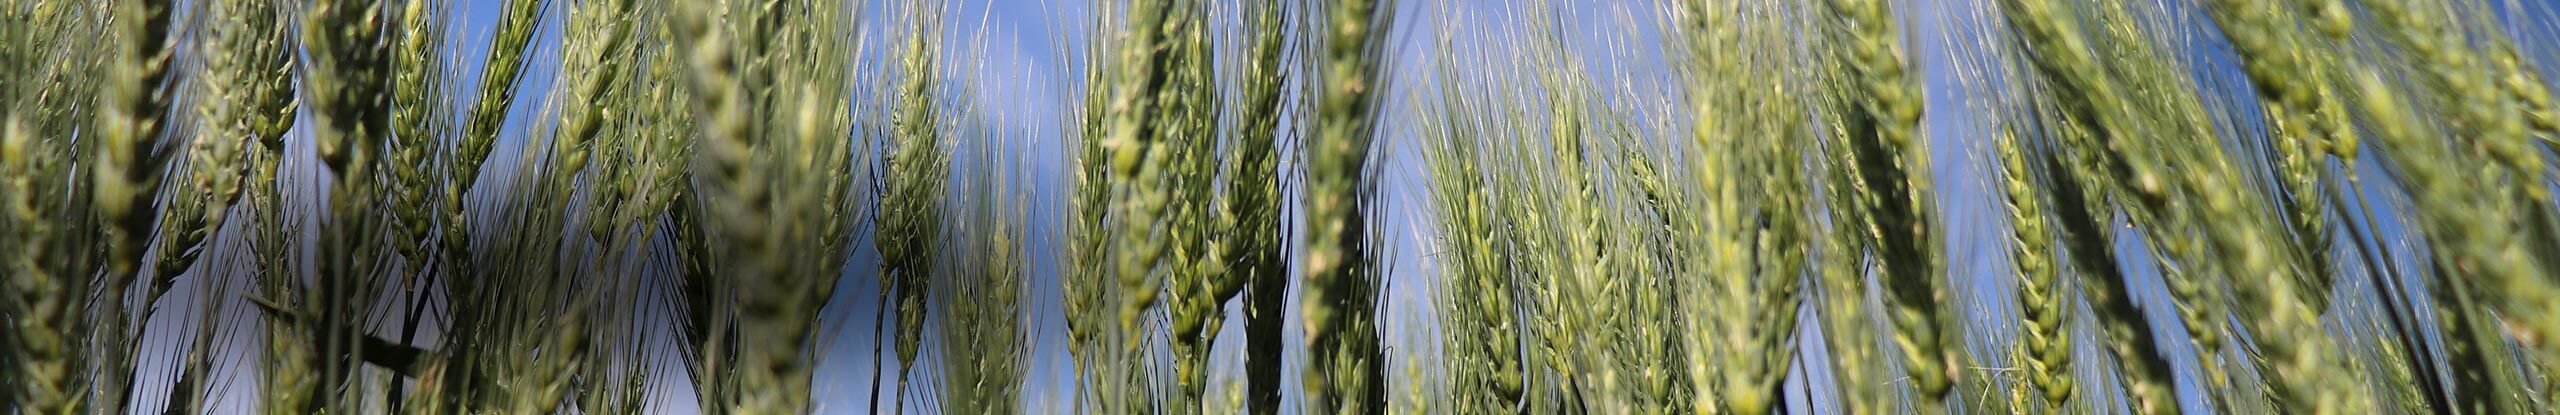 Factsheet: Optimizing Nitrogen Fertilizer Management Strategies for High-Yielding Spring Wheat in Manitoba